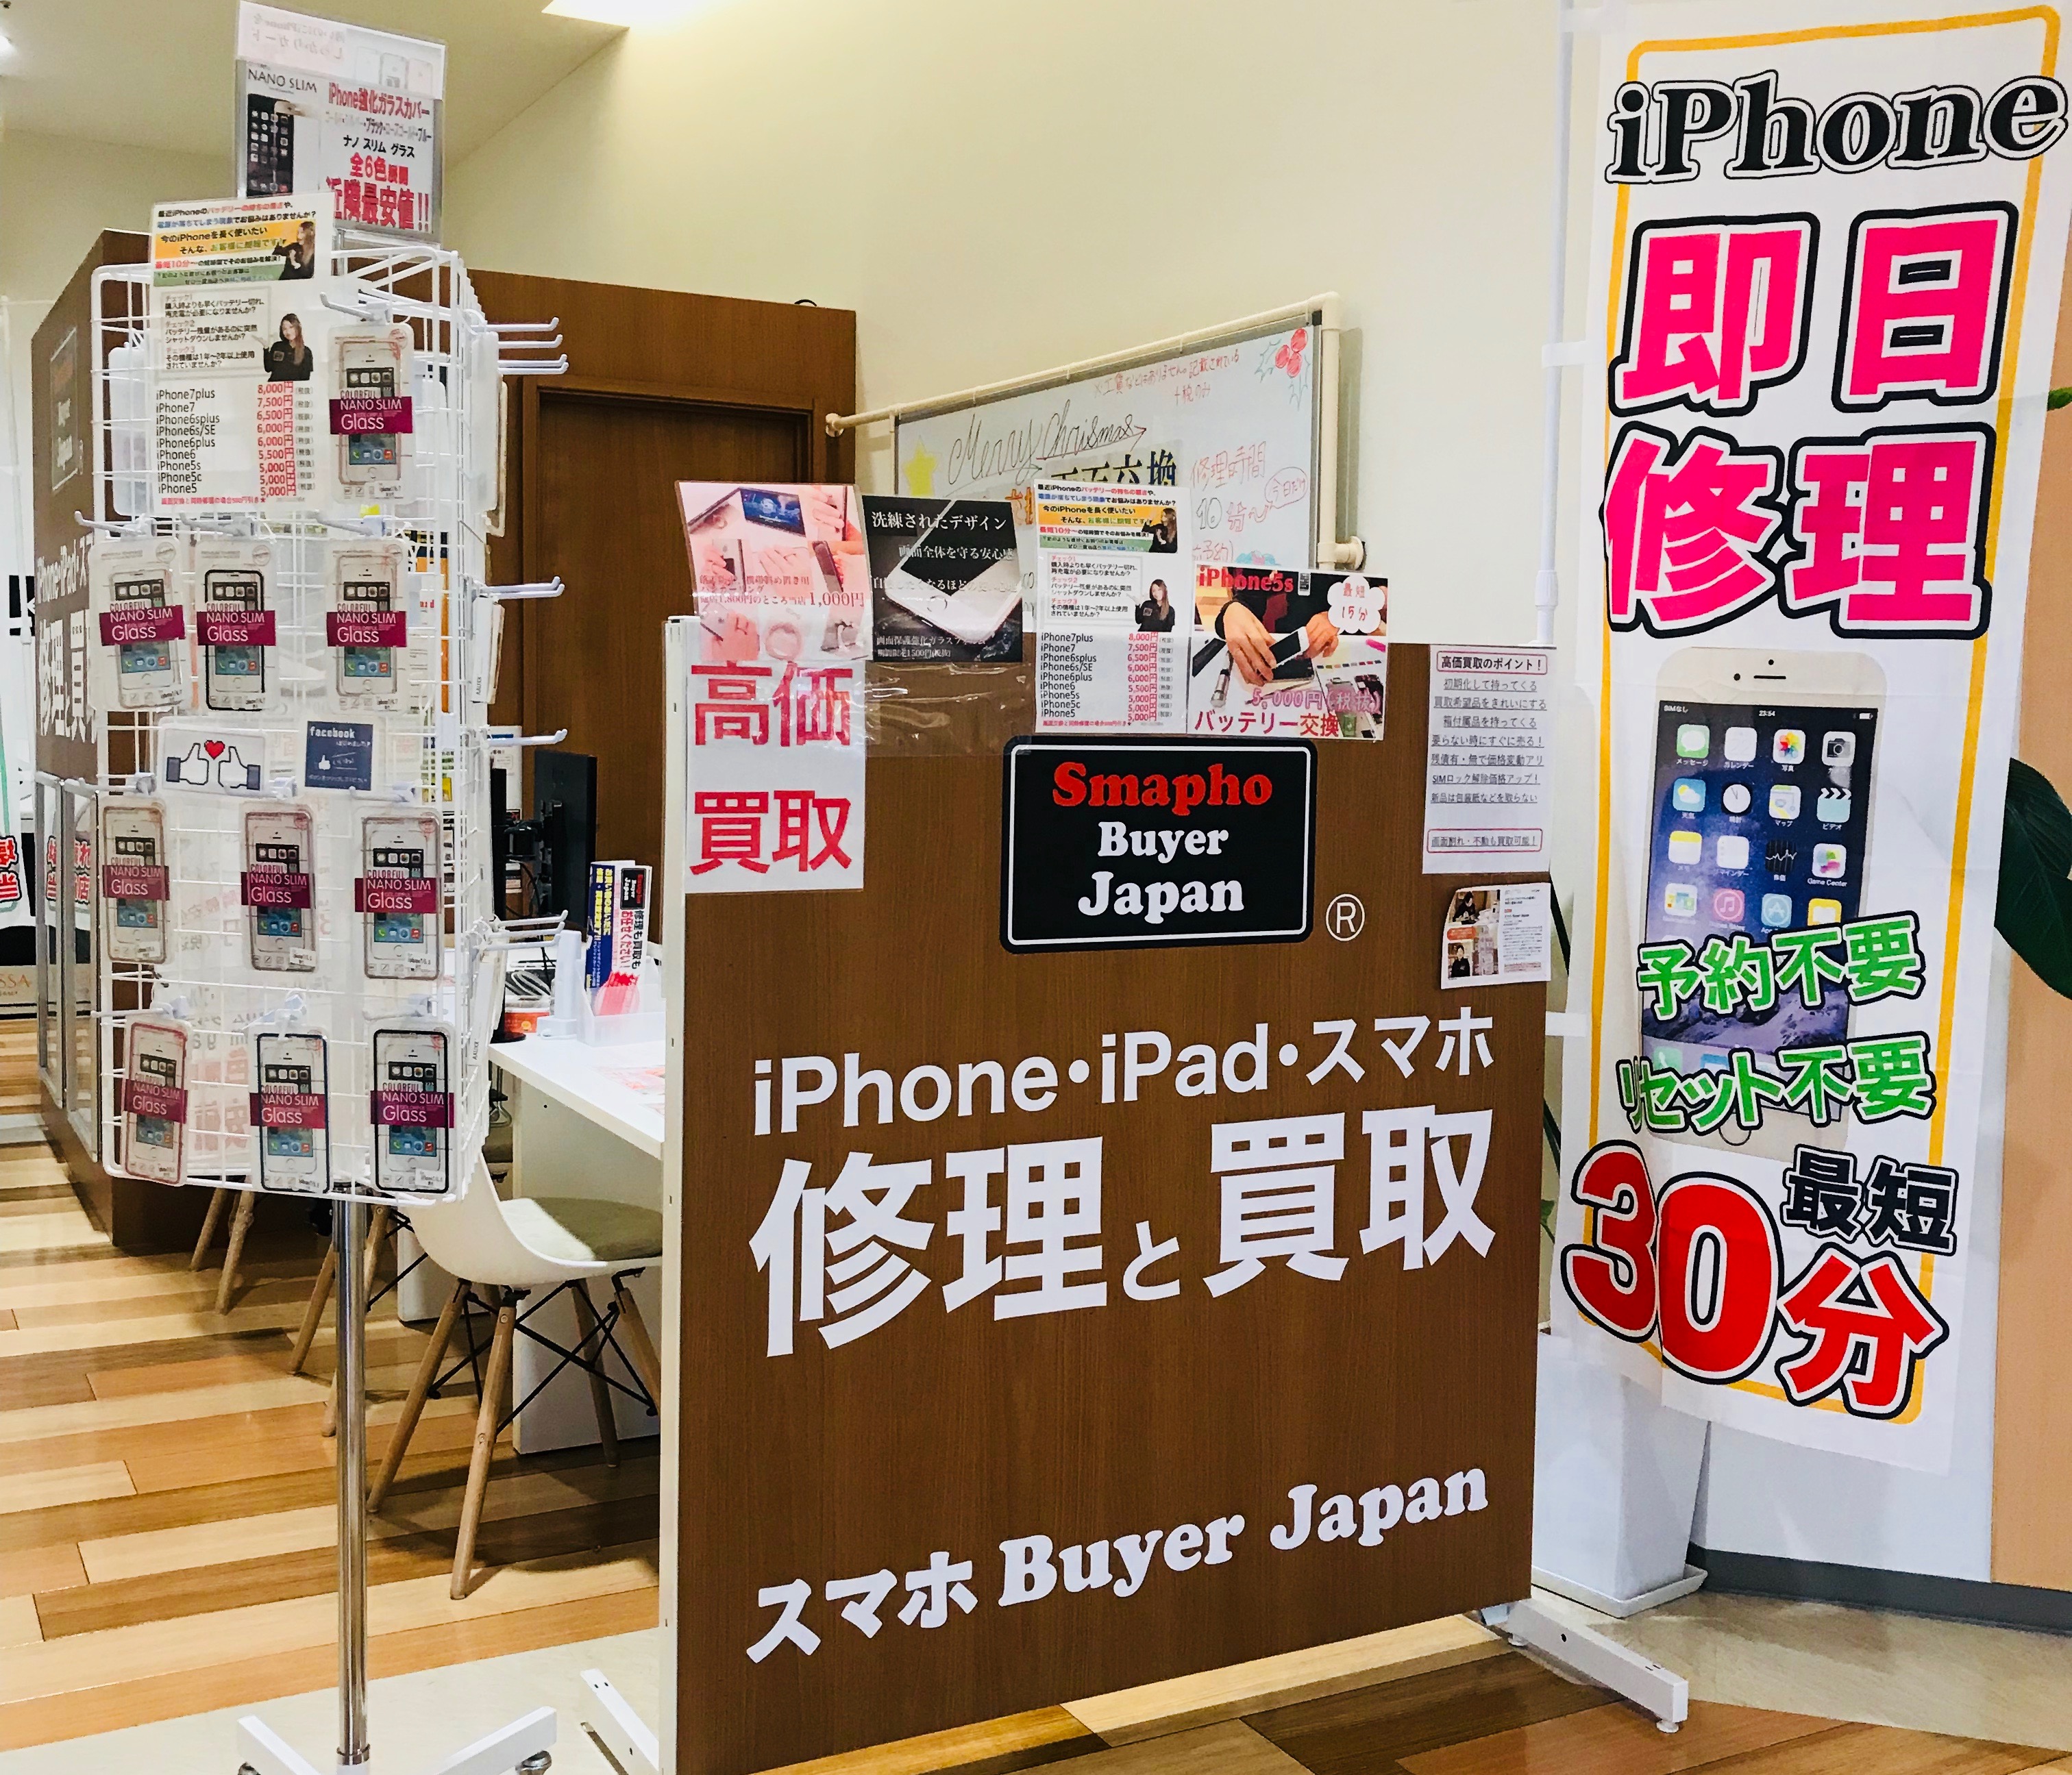 iPhone 修理のスマホBuyerJapan-横浜店-